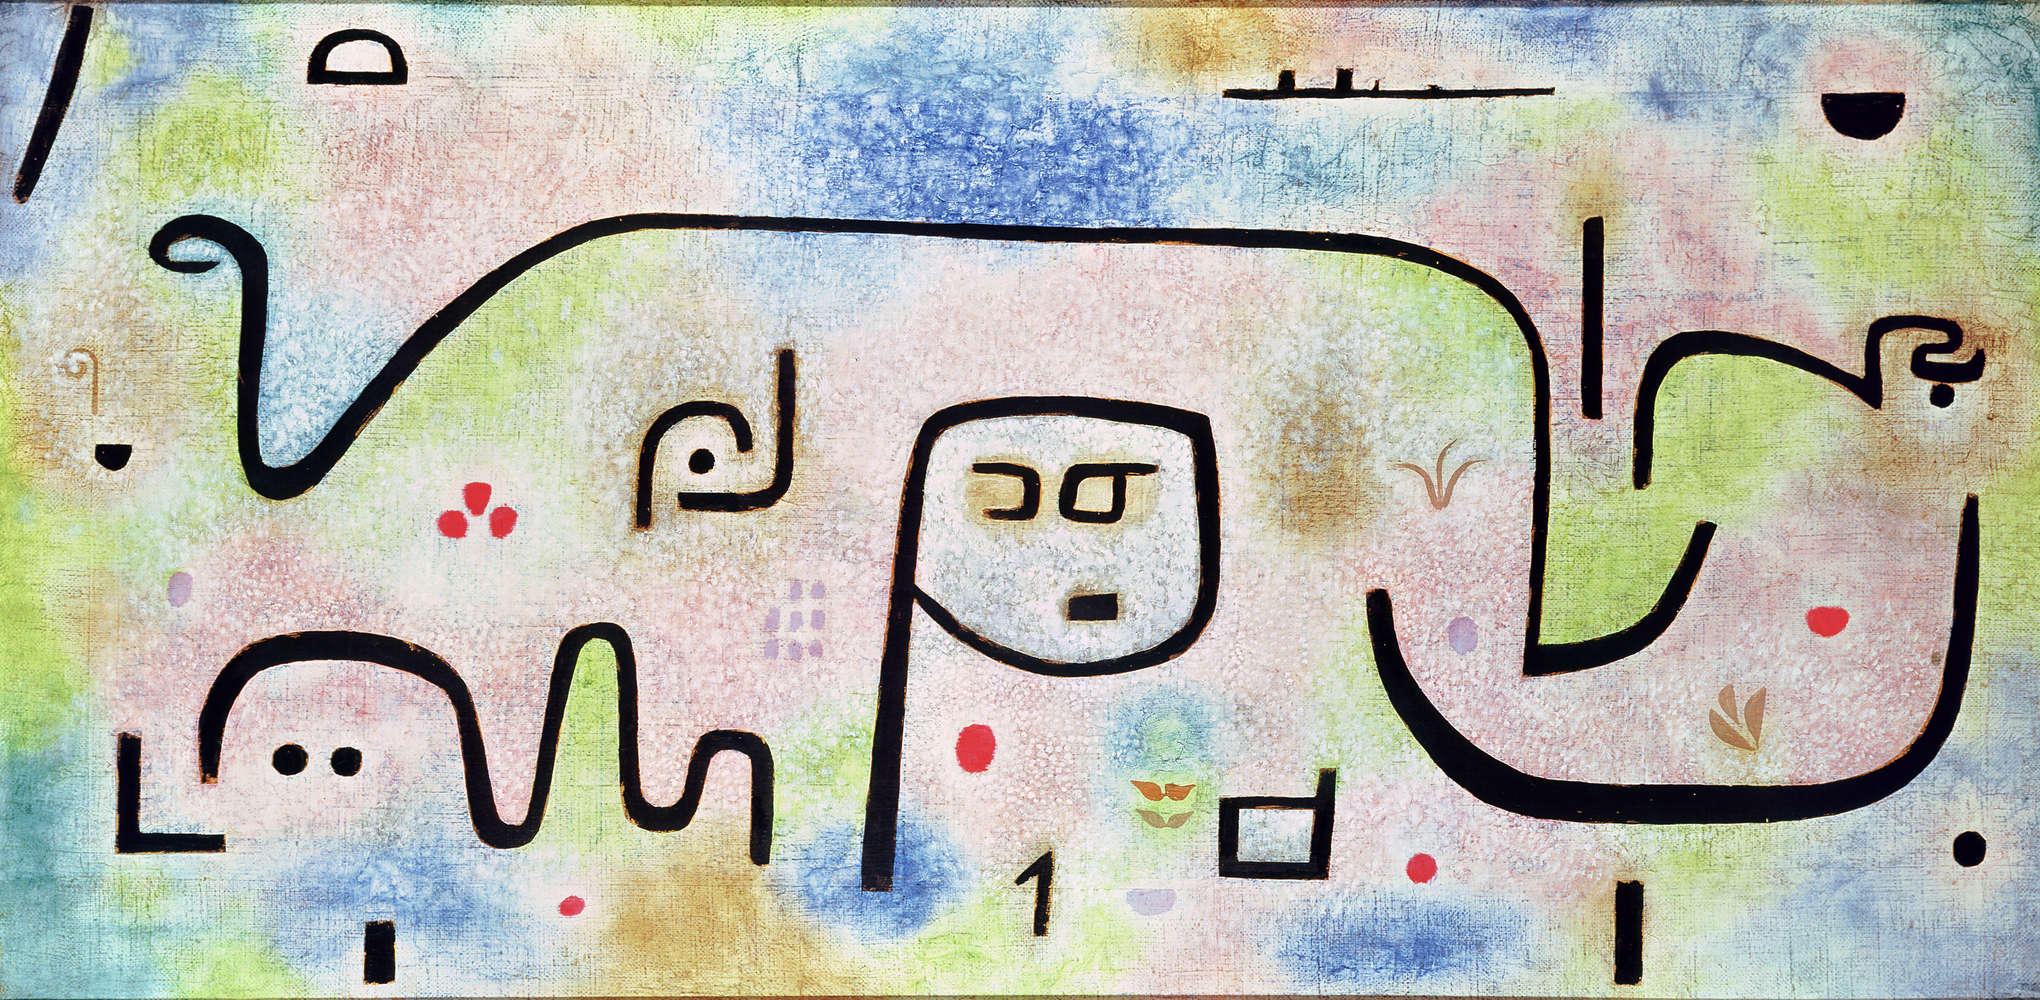             Mural "Insula Dulcamara" de Paul Klee
        